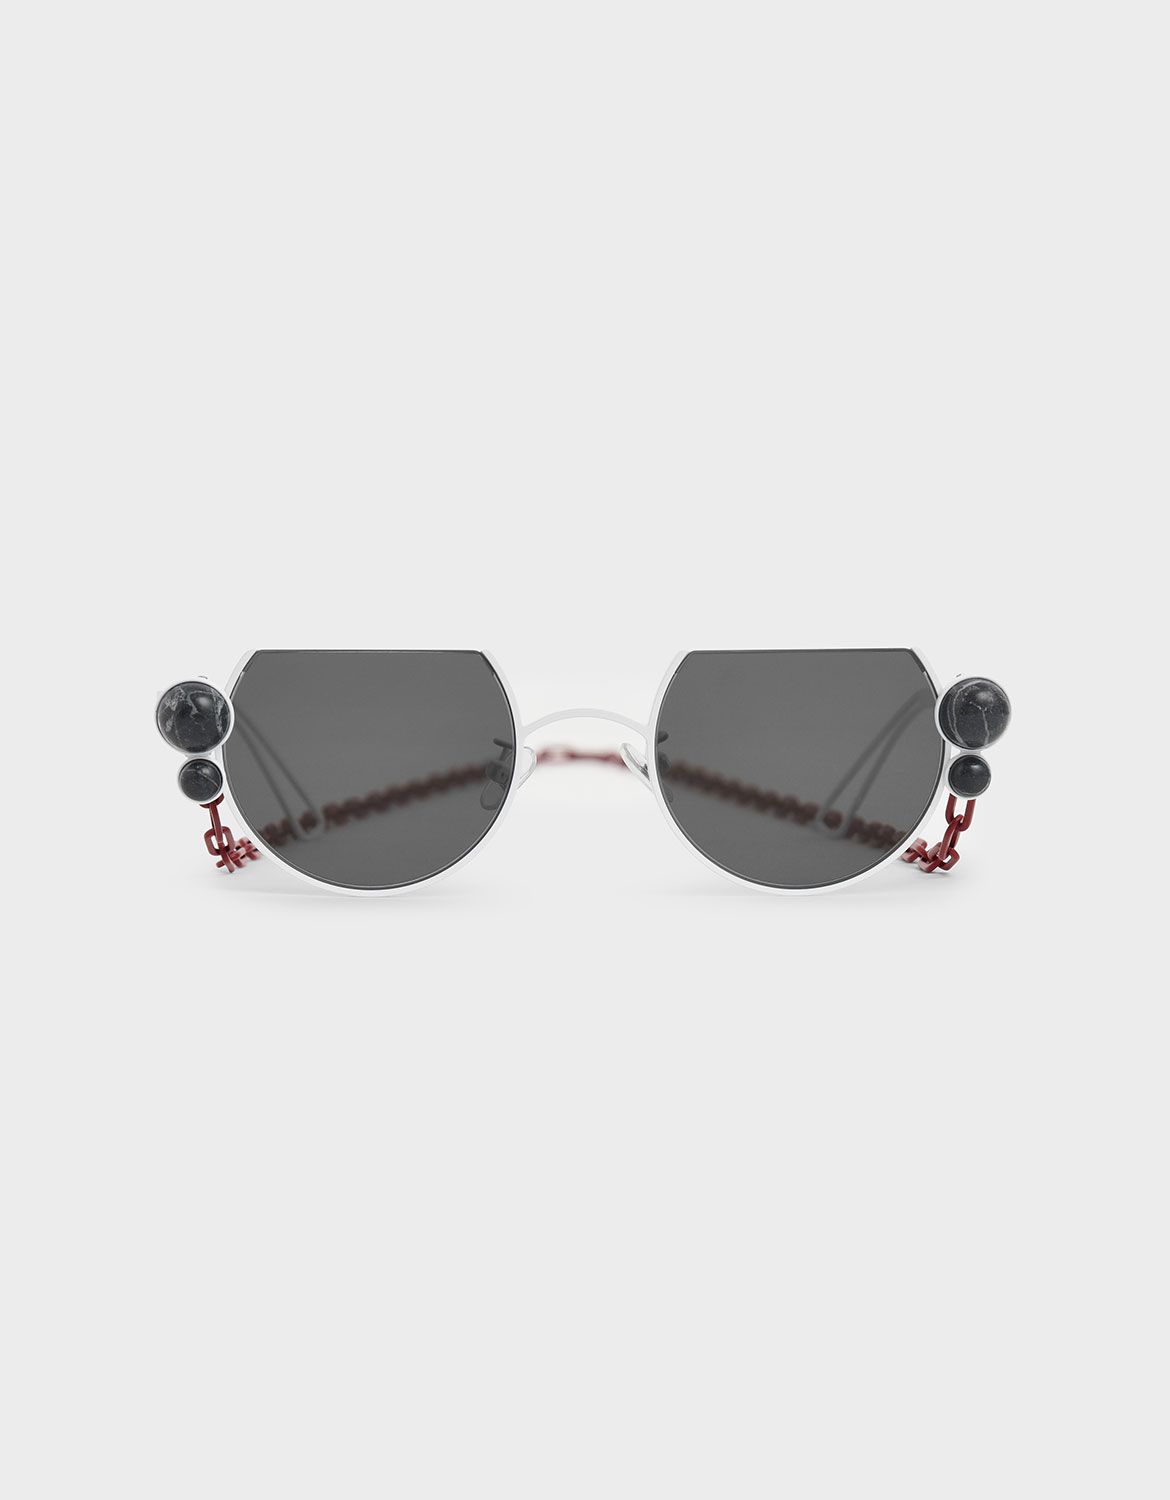 Onyx Stone Chain Link Round Cut-Off Sunglasses